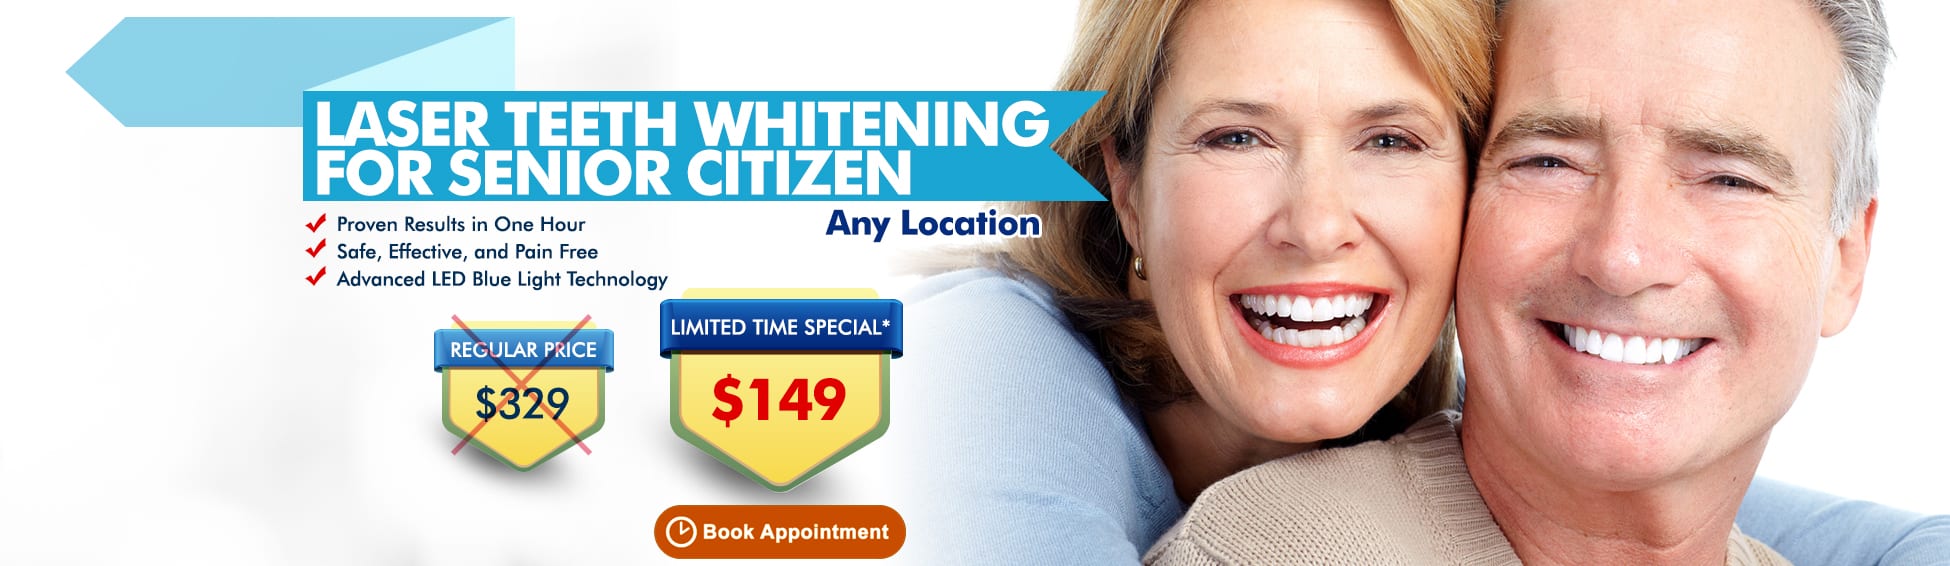 Laser Teeth Whitening For Senior Citizen – Any Location - $199 $149